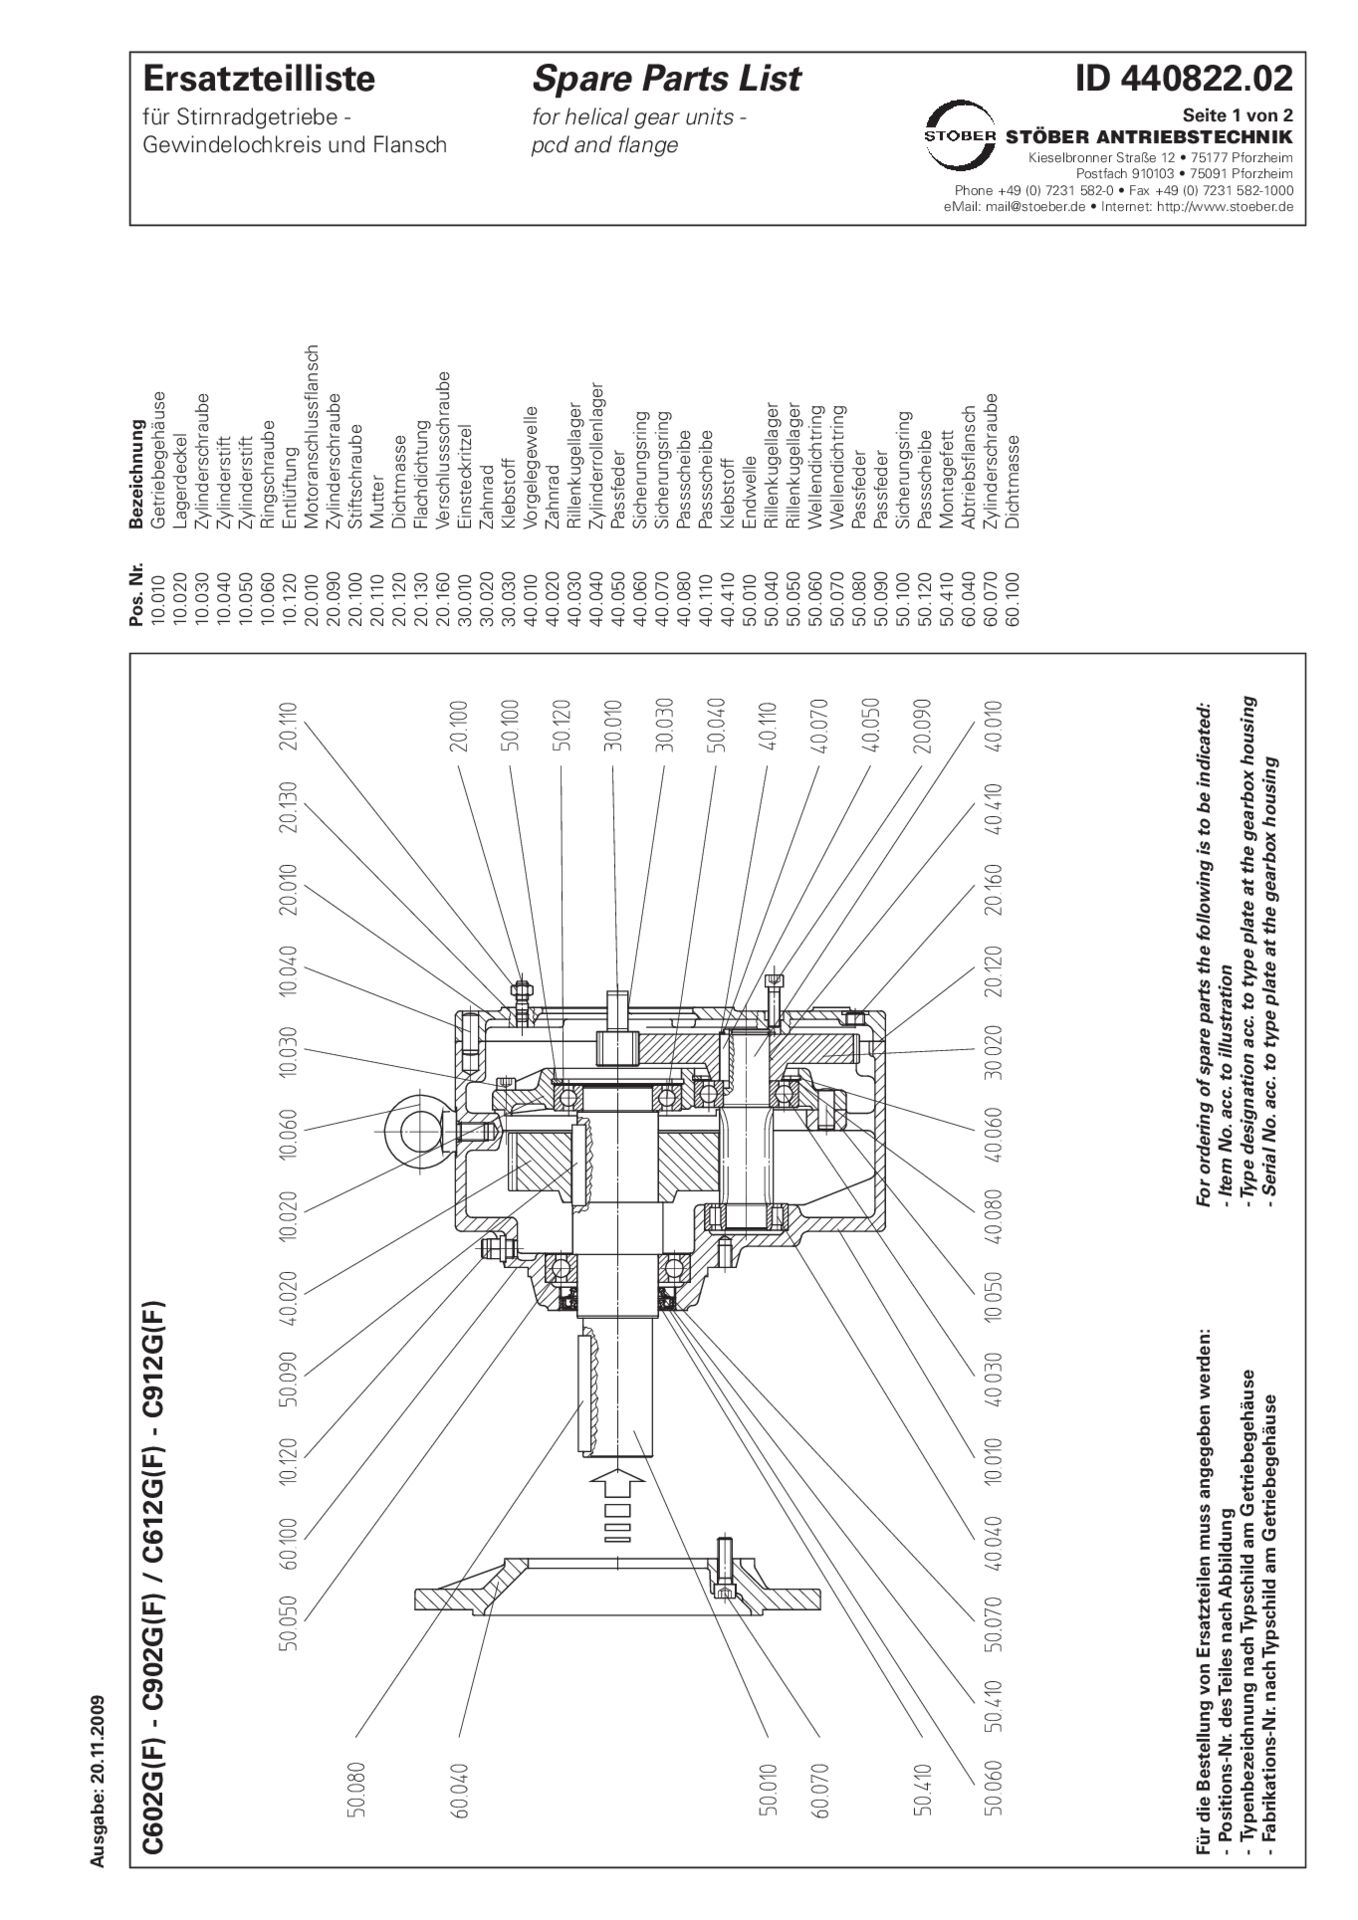 Replacement parts list helical gear units C602 C612 C702 C712 C802 C812 C902 C912 G FErsatzteilliste Stirnradgetriebe C602 C612 C702 C712 C802 C812 C902 C912 G F